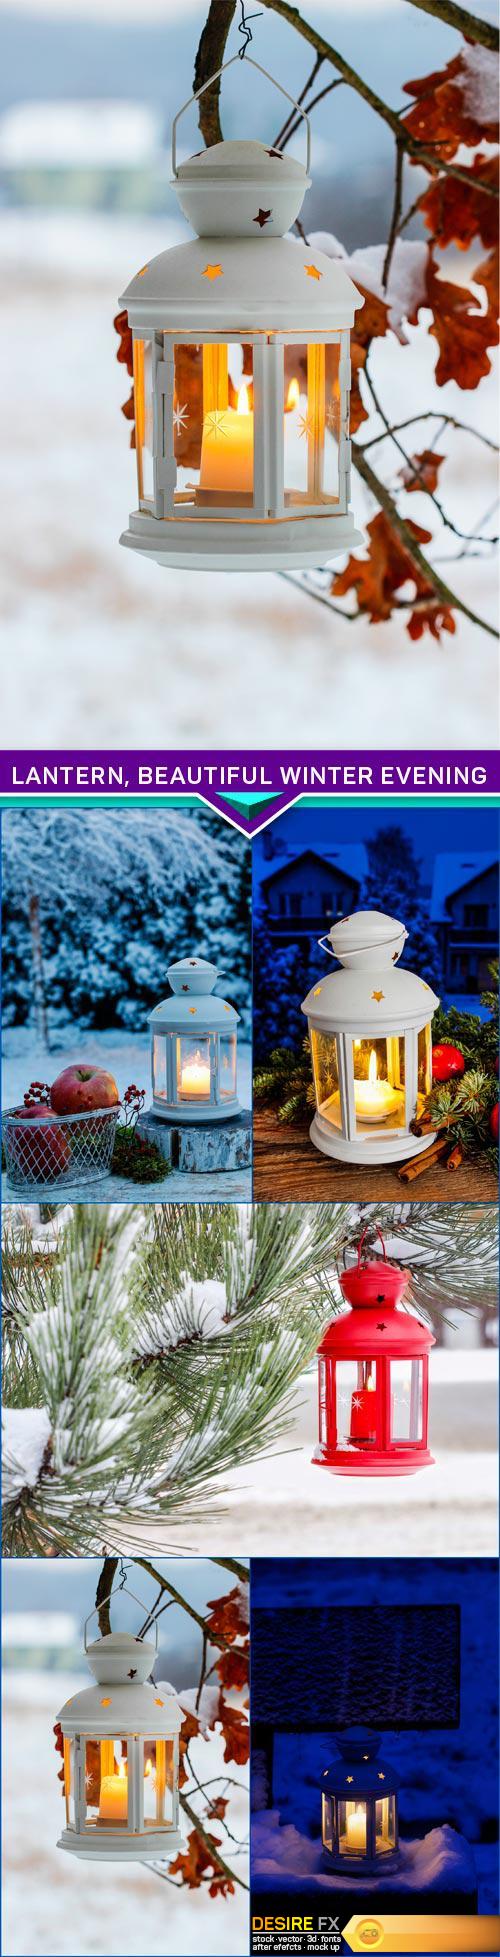 lantern, beautiful winter evening 5X JPEG